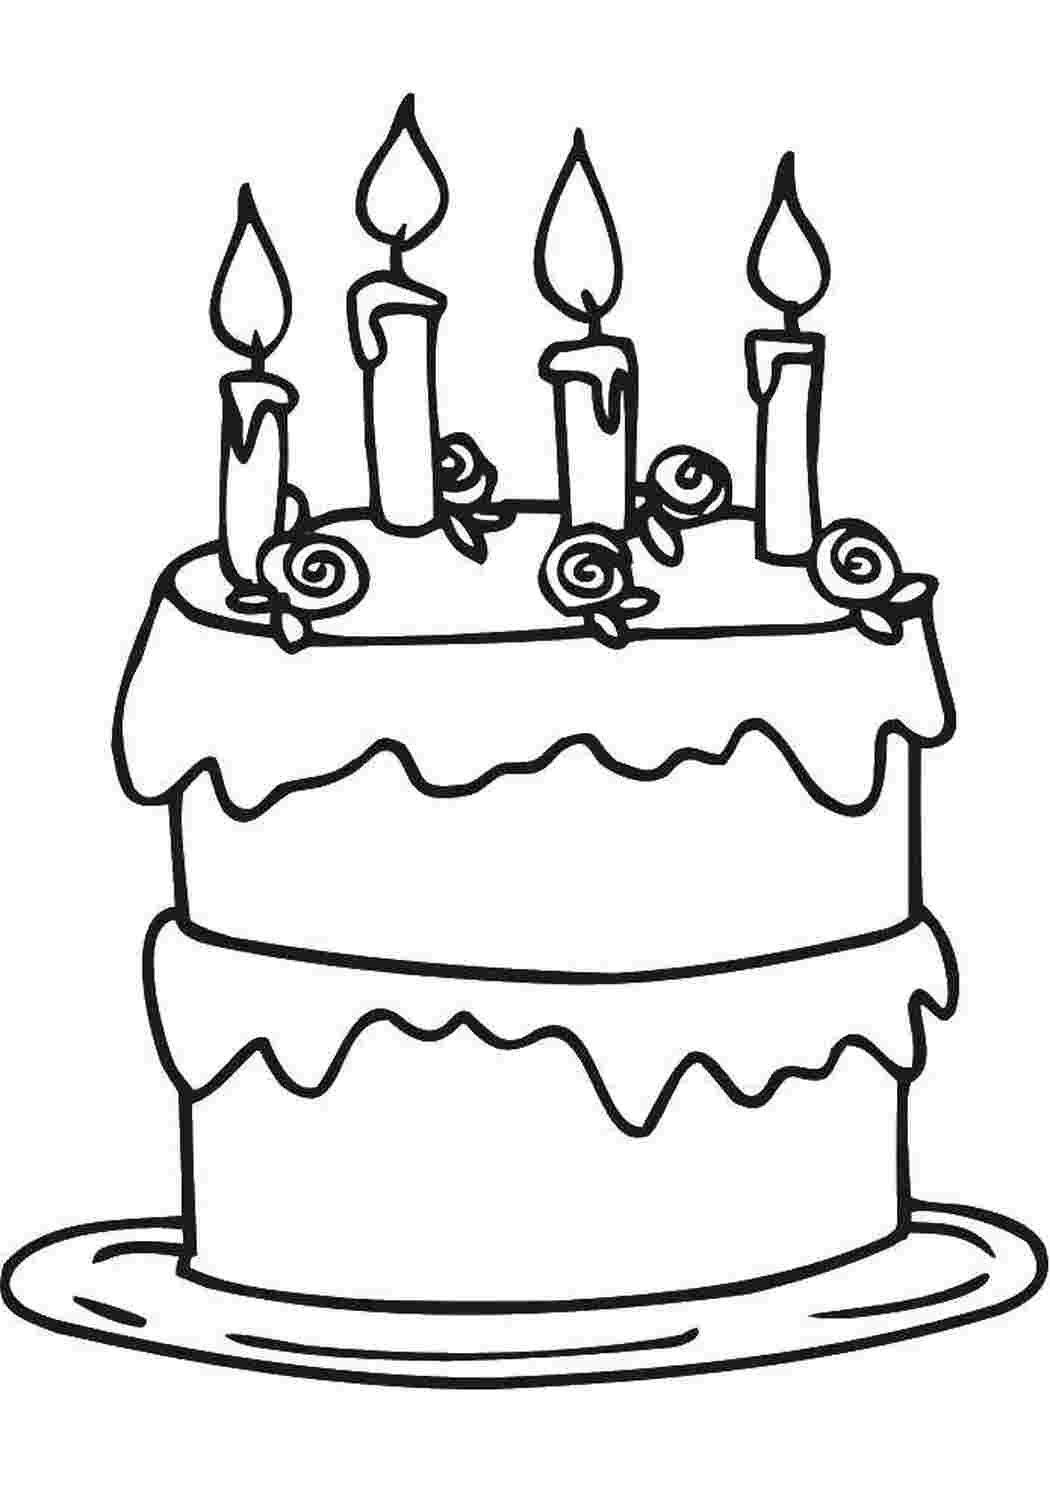 Раскраски Торт с розочками и свечи торты торт, свечки, крем